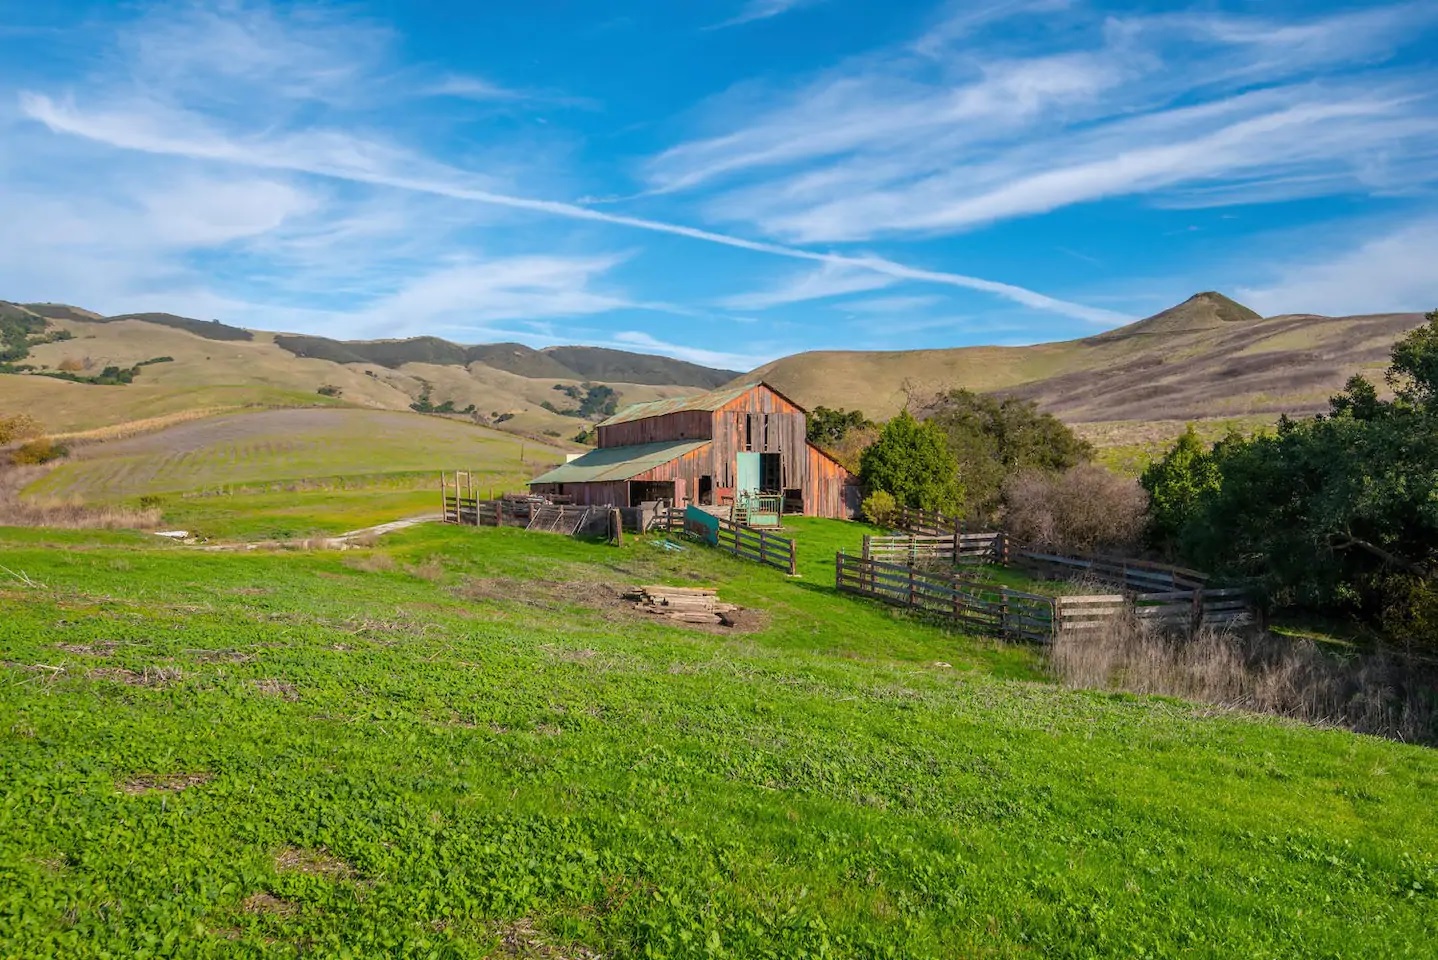 Unique San Luis Obispo Airbnb